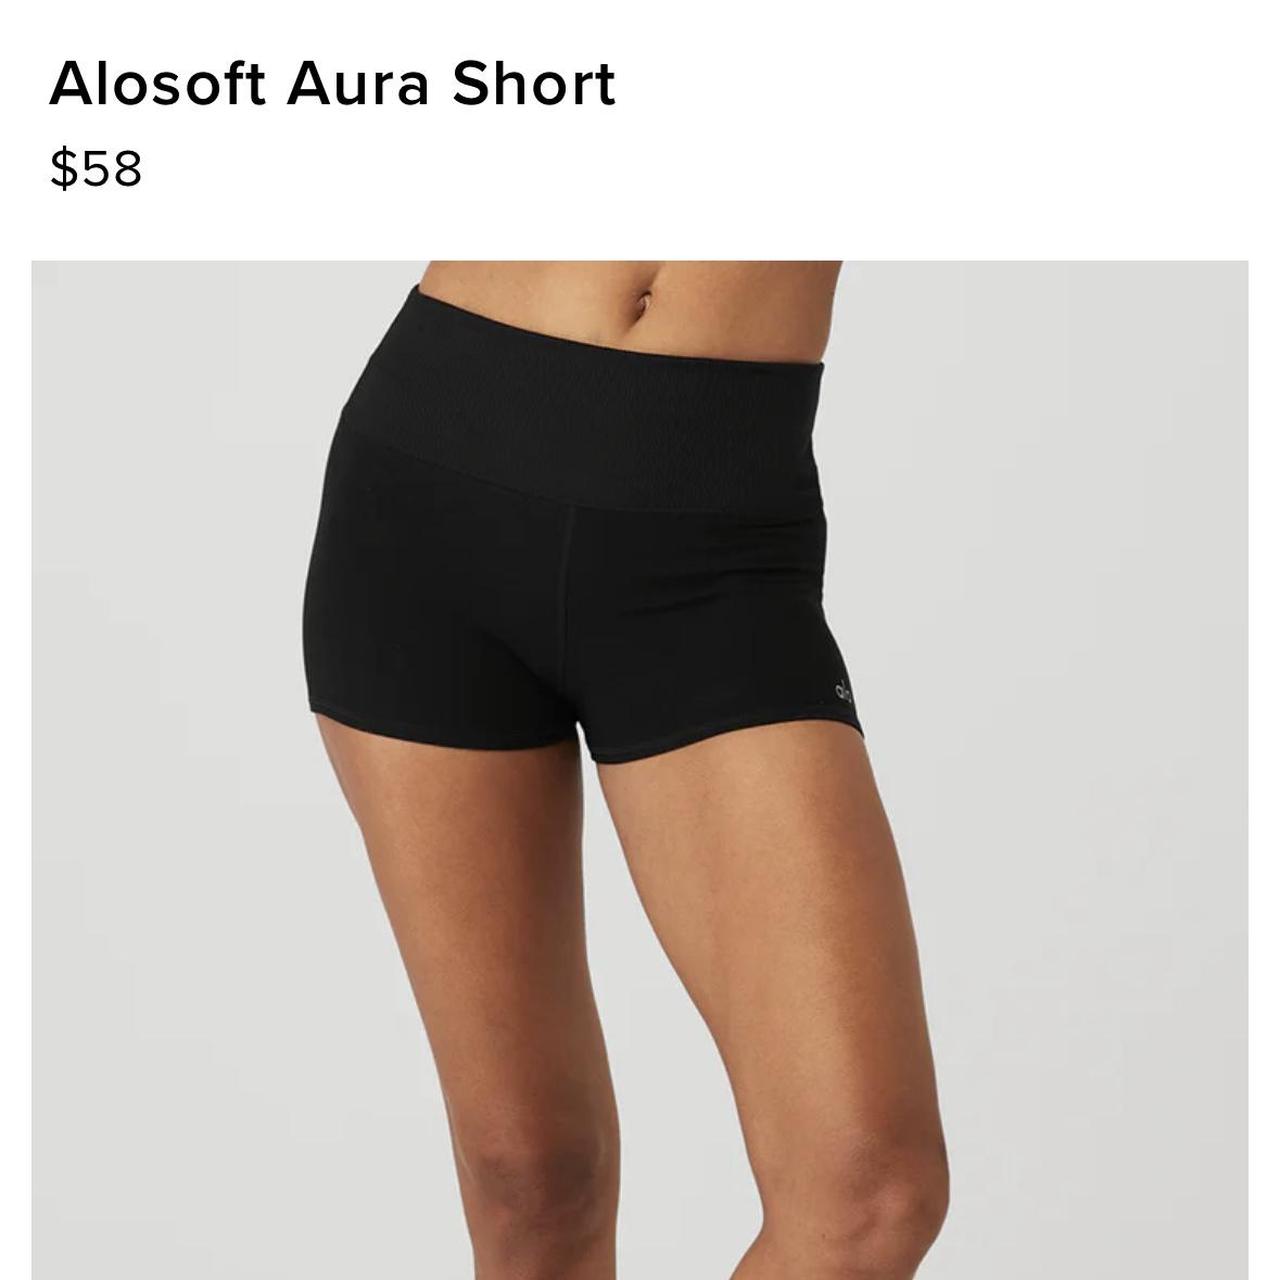 Alosoft aura short biker shorts super cute size L - - Depop